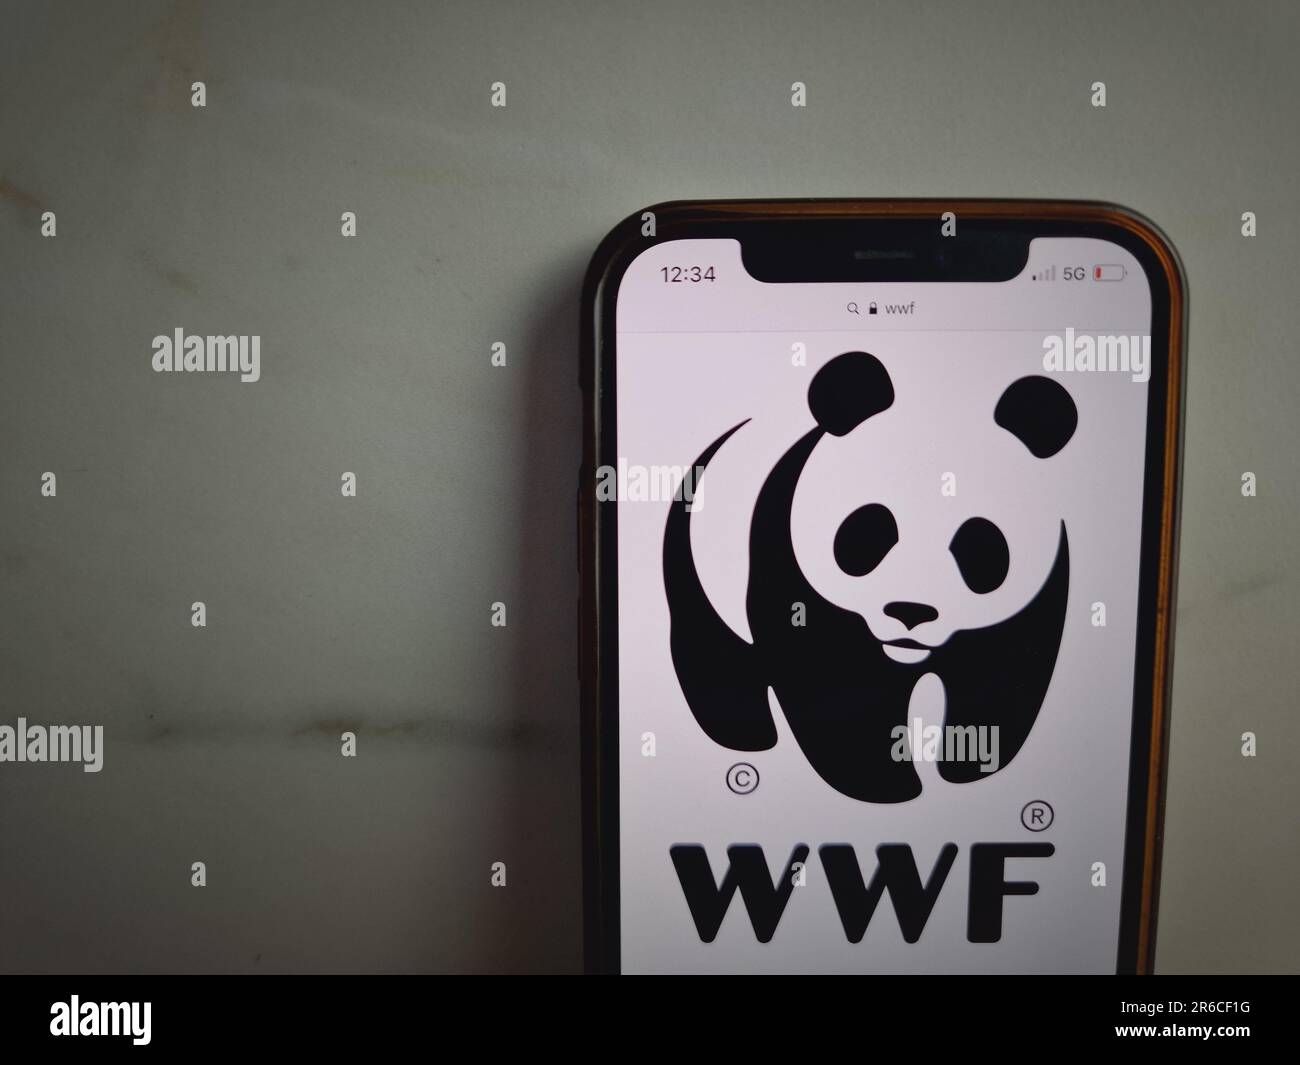 Konskie, Polen - 08. Juni 2023: WWF-Logo des World Wide Fund for Nature auf dem Bildschirm des Mobiltelefons Stockfoto